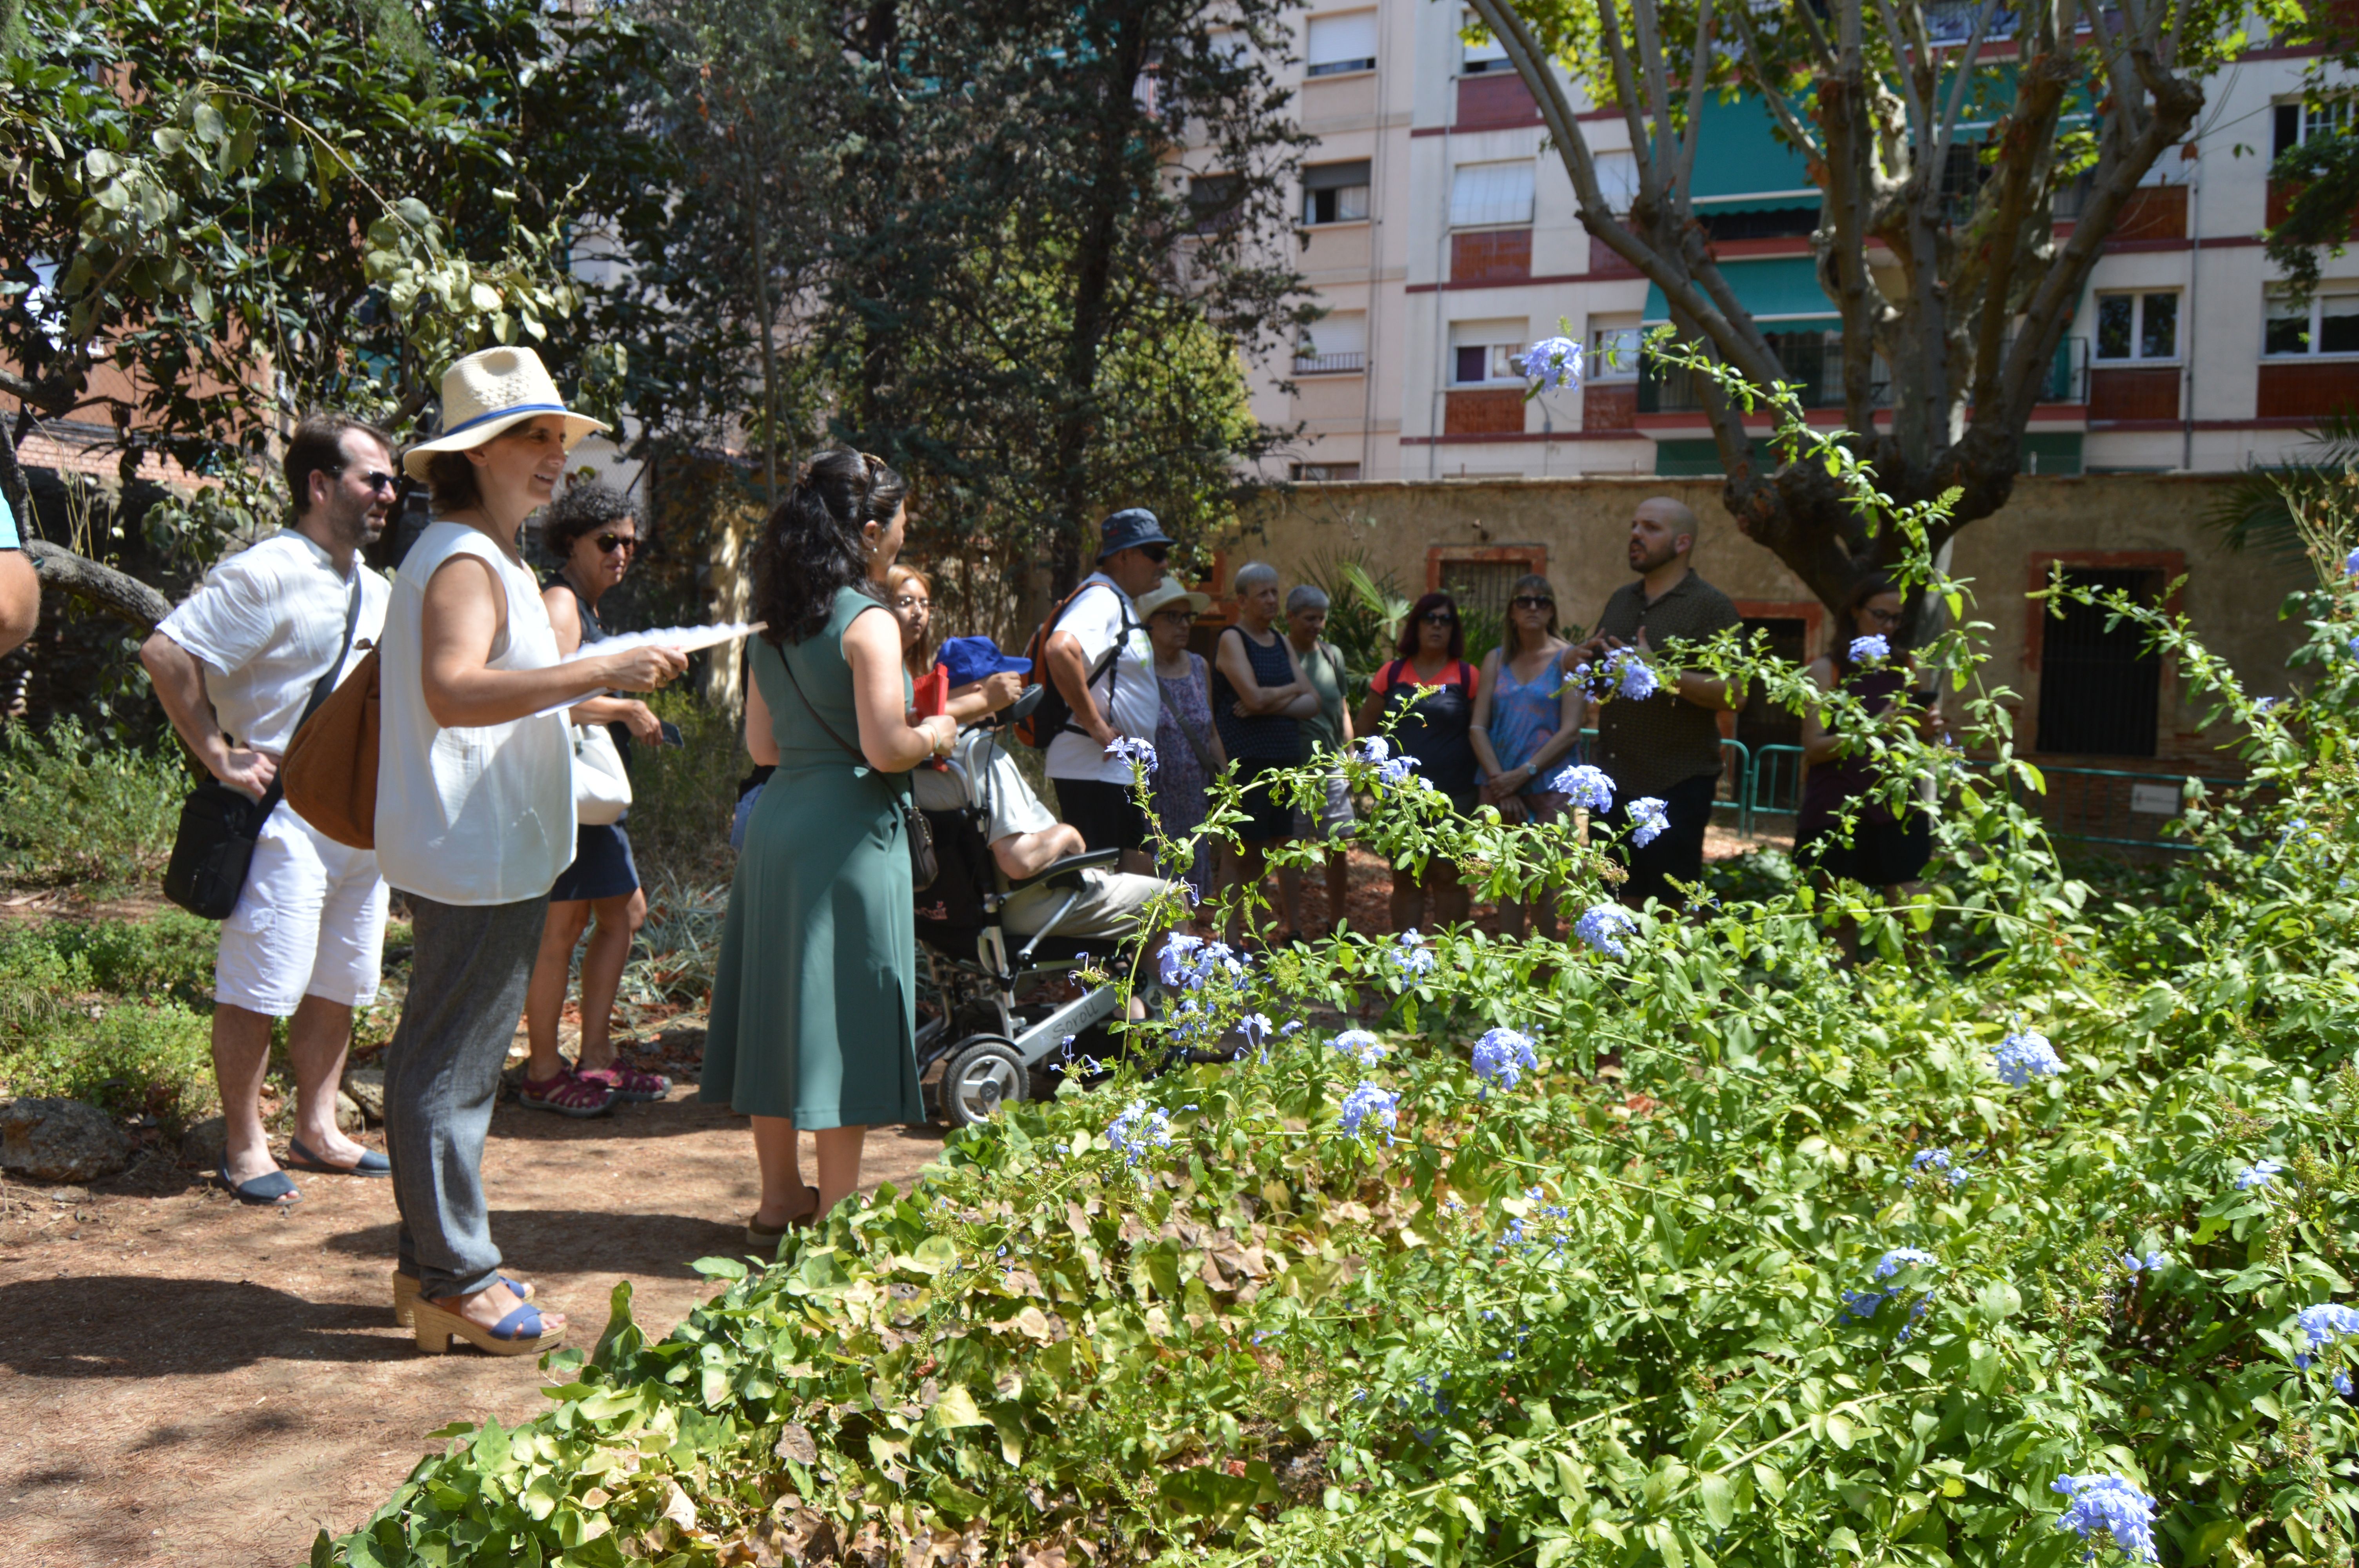 La visita continua als jardins de Can Llopis. FOTO: Nora Muñoz Otero